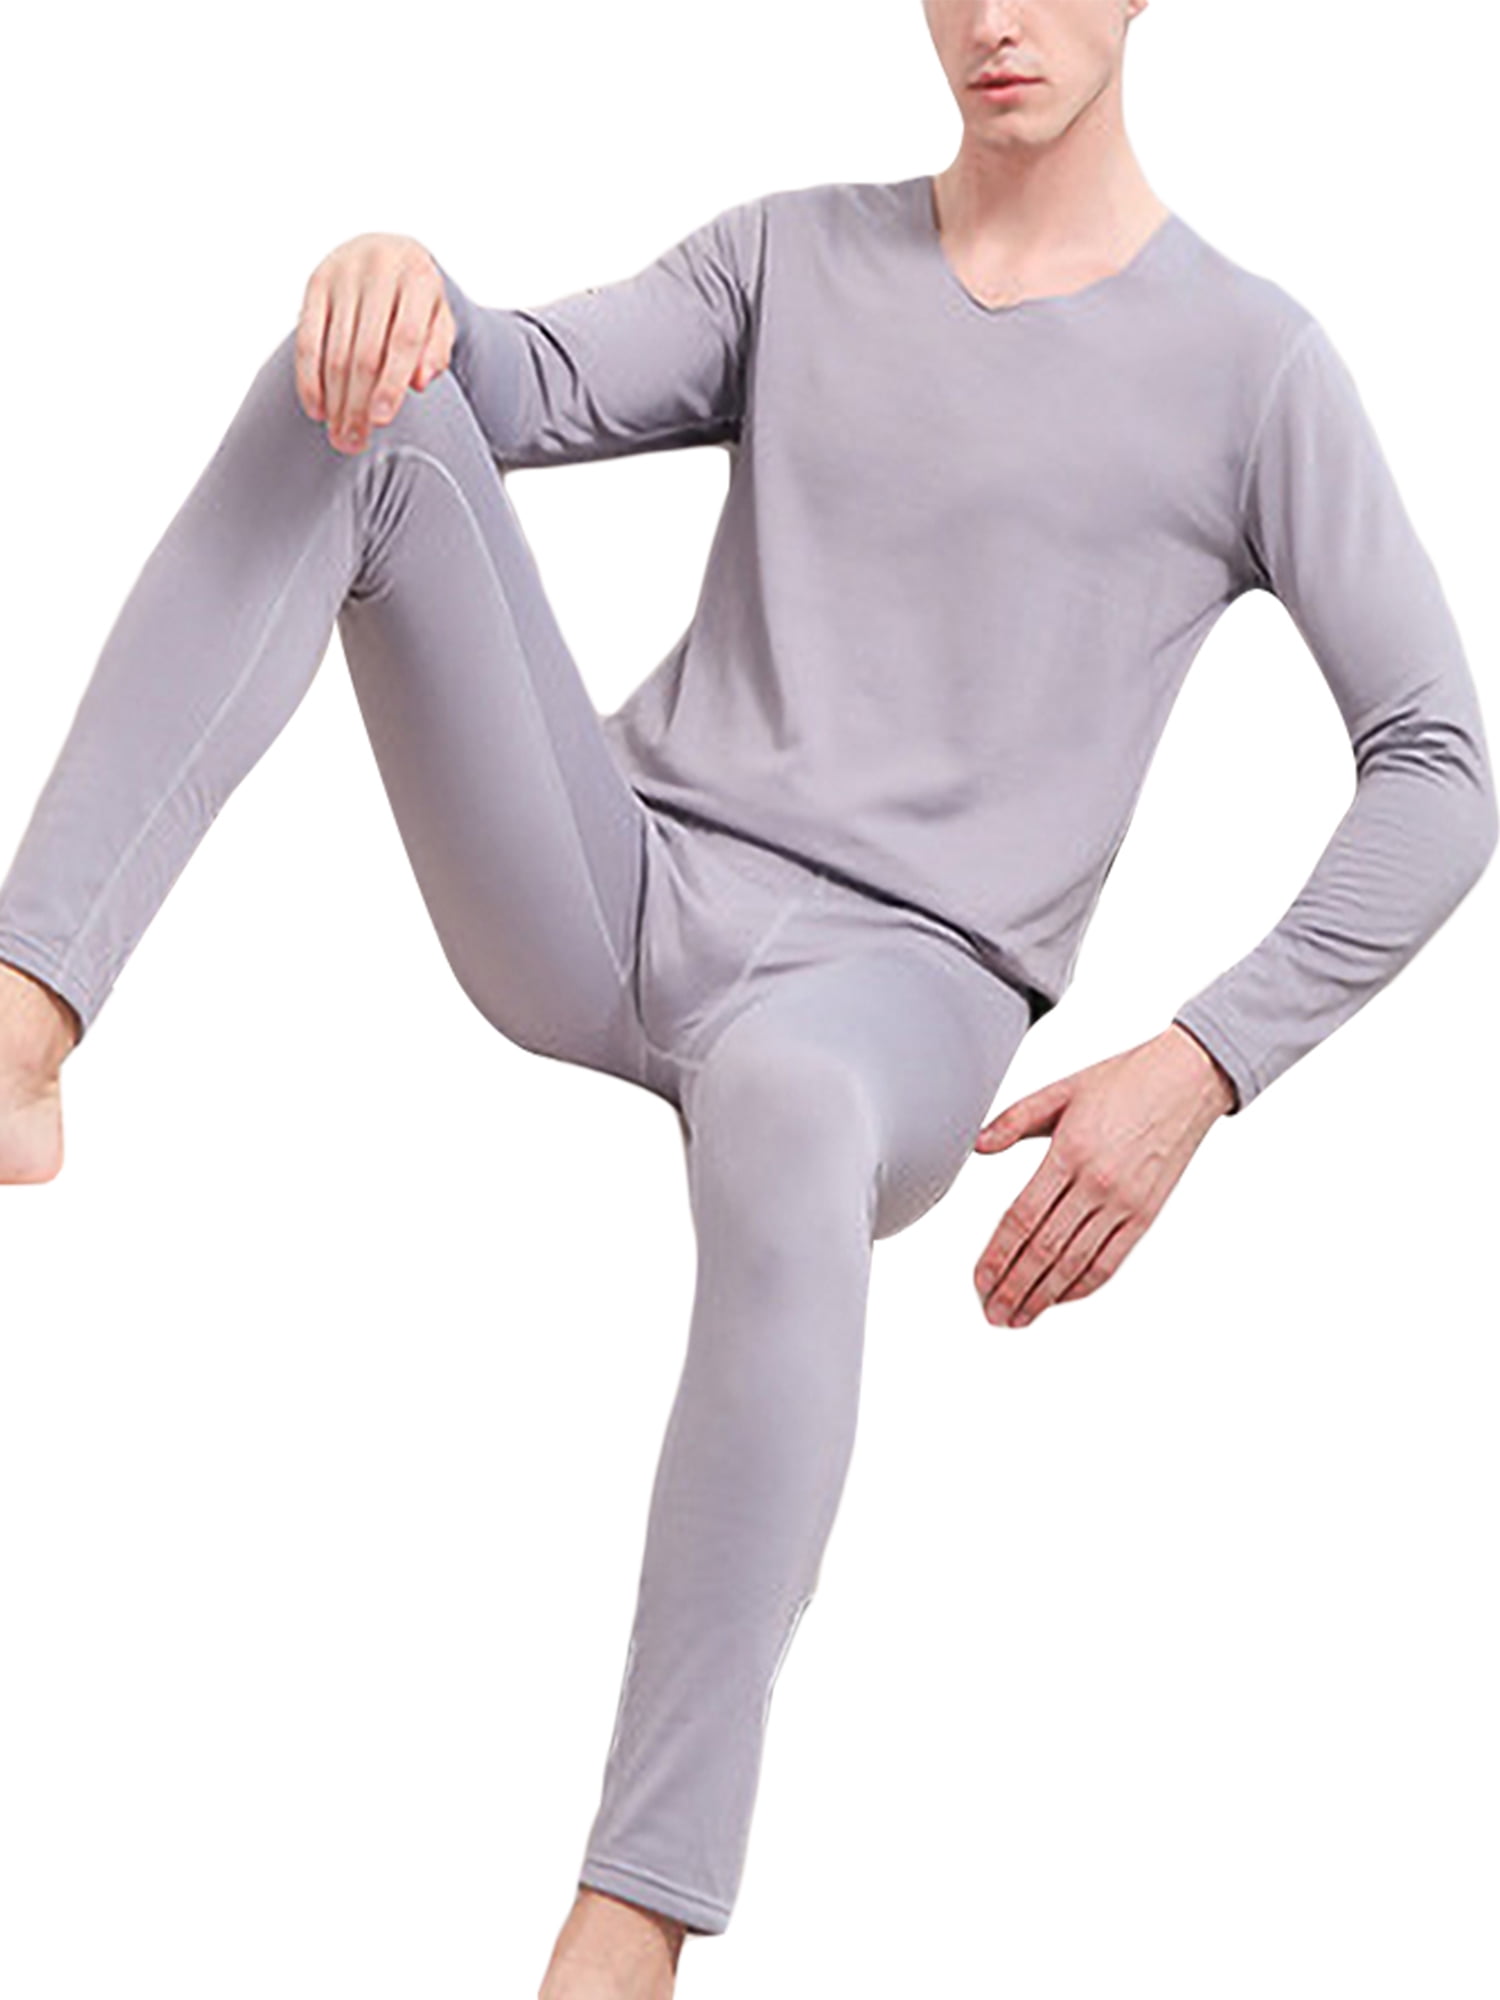 Men Winter Sports Thermal Fleece Underwear Suits Top Bottom Long Johns Set